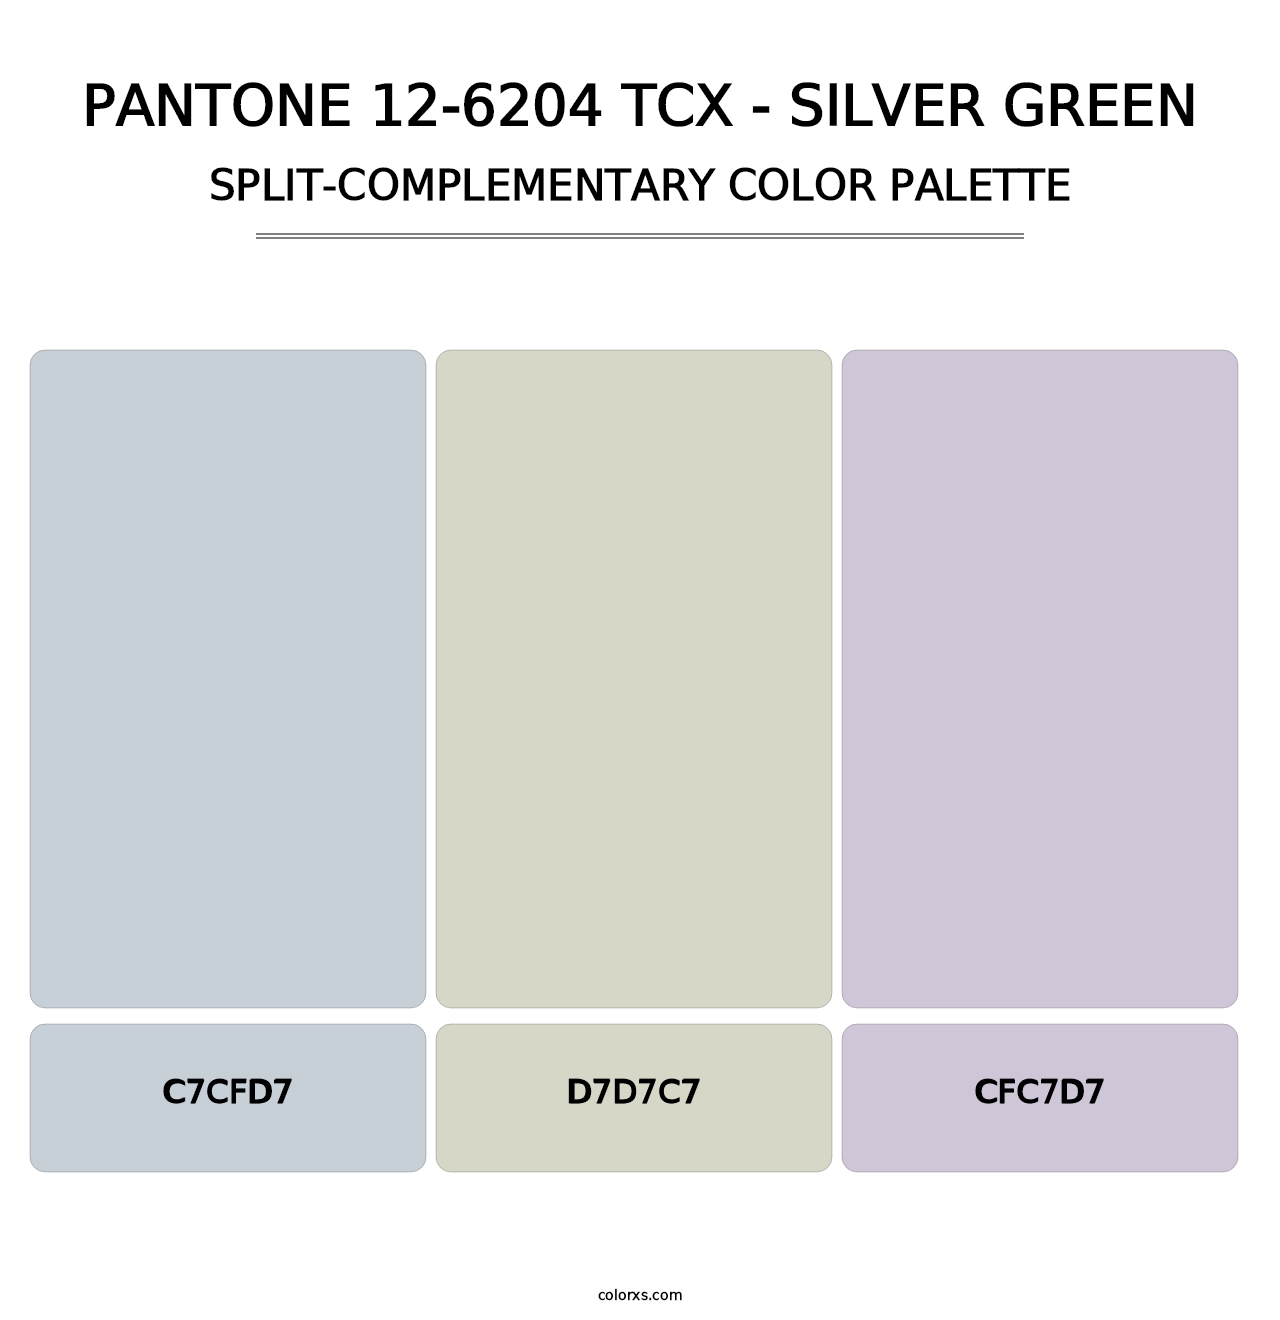 PANTONE 12-6204 TCX - Silver Green - Split-Complementary Color Palette